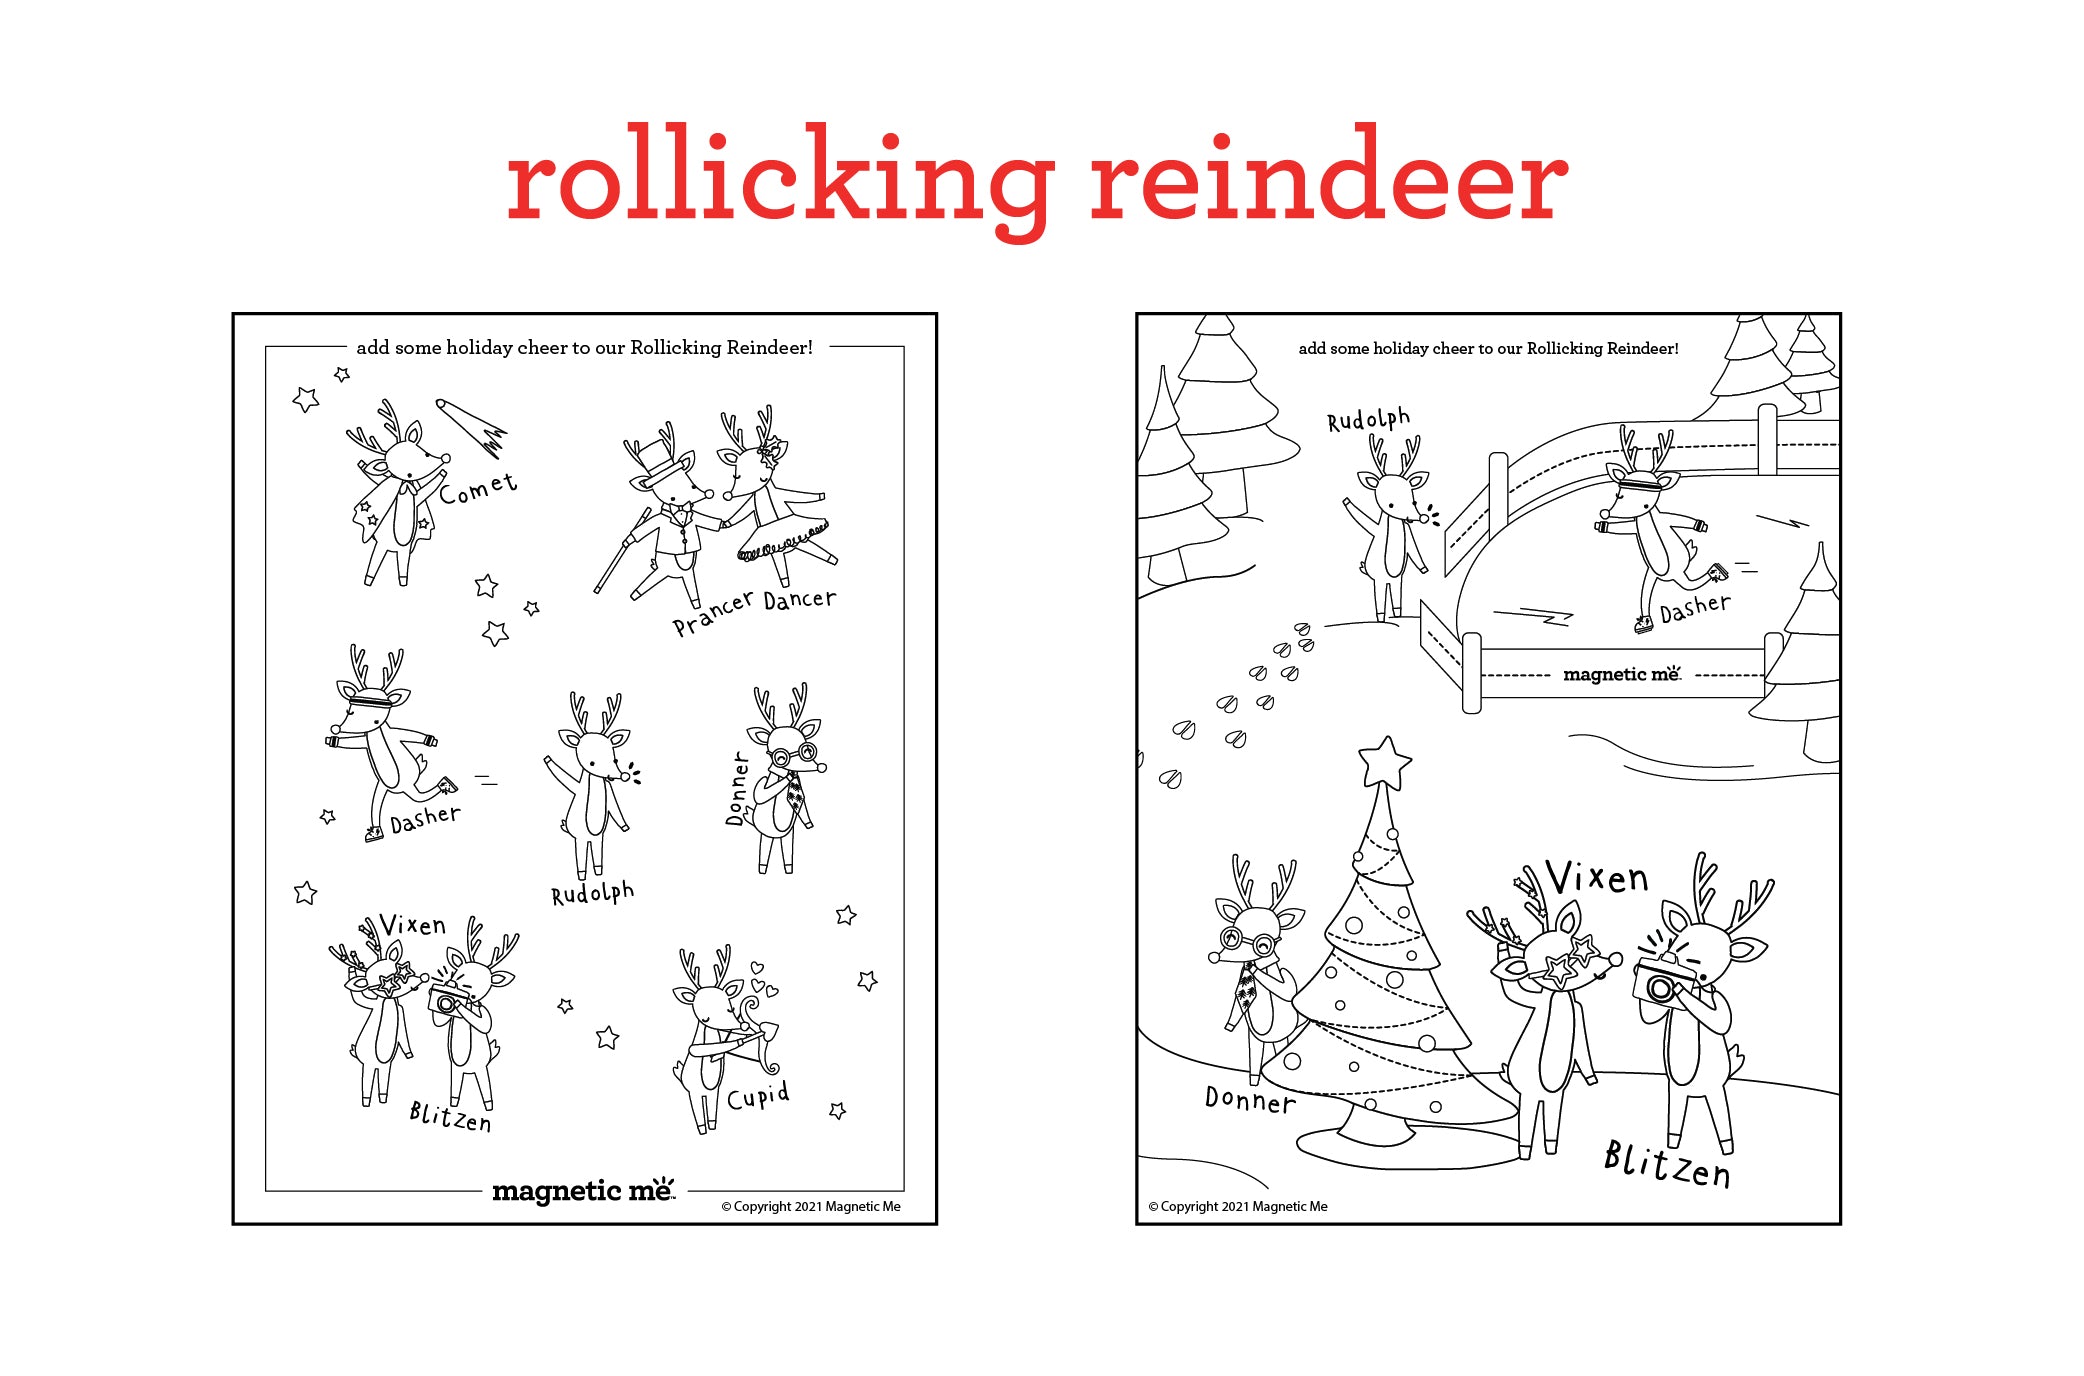 rollicking reindeer preview